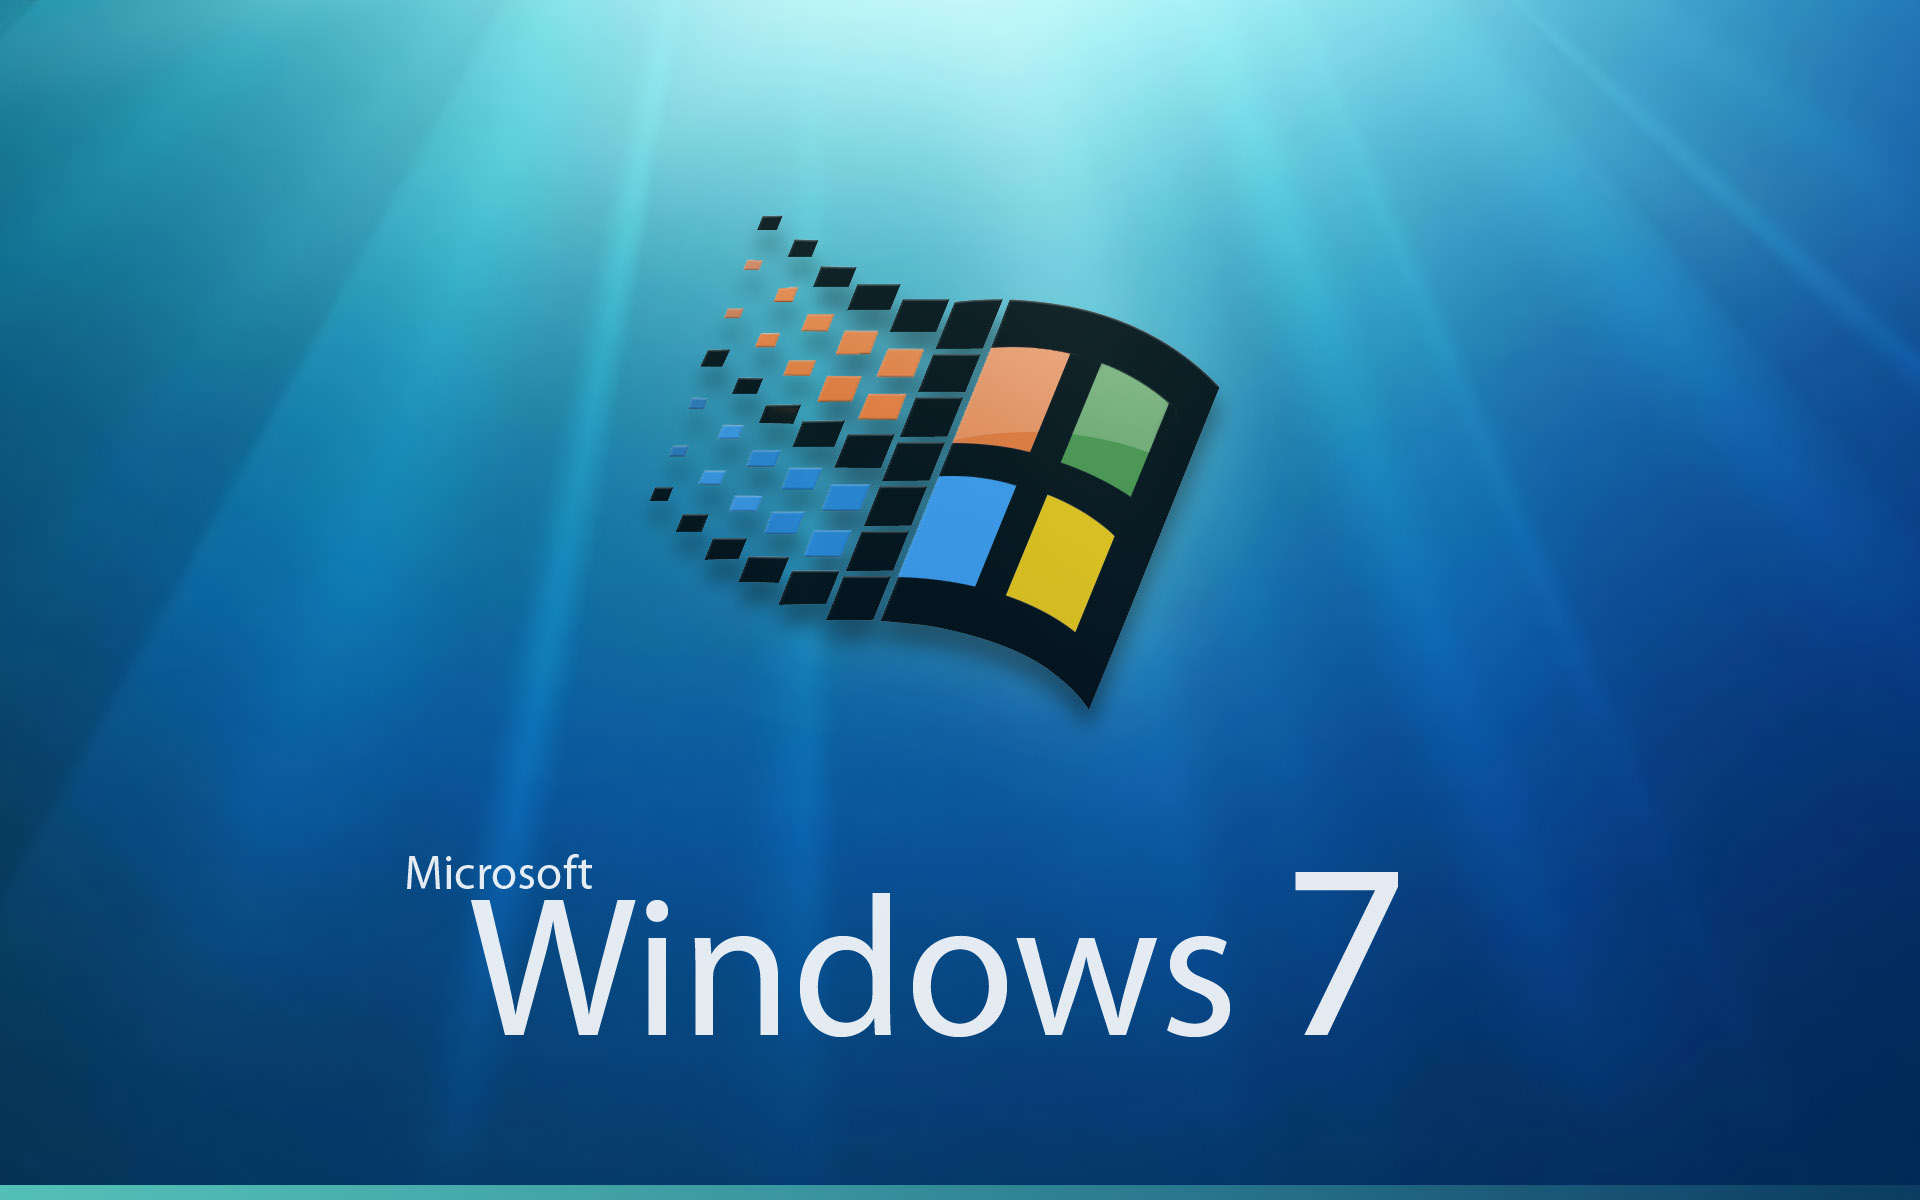 Microsoft Windows Logo Photo